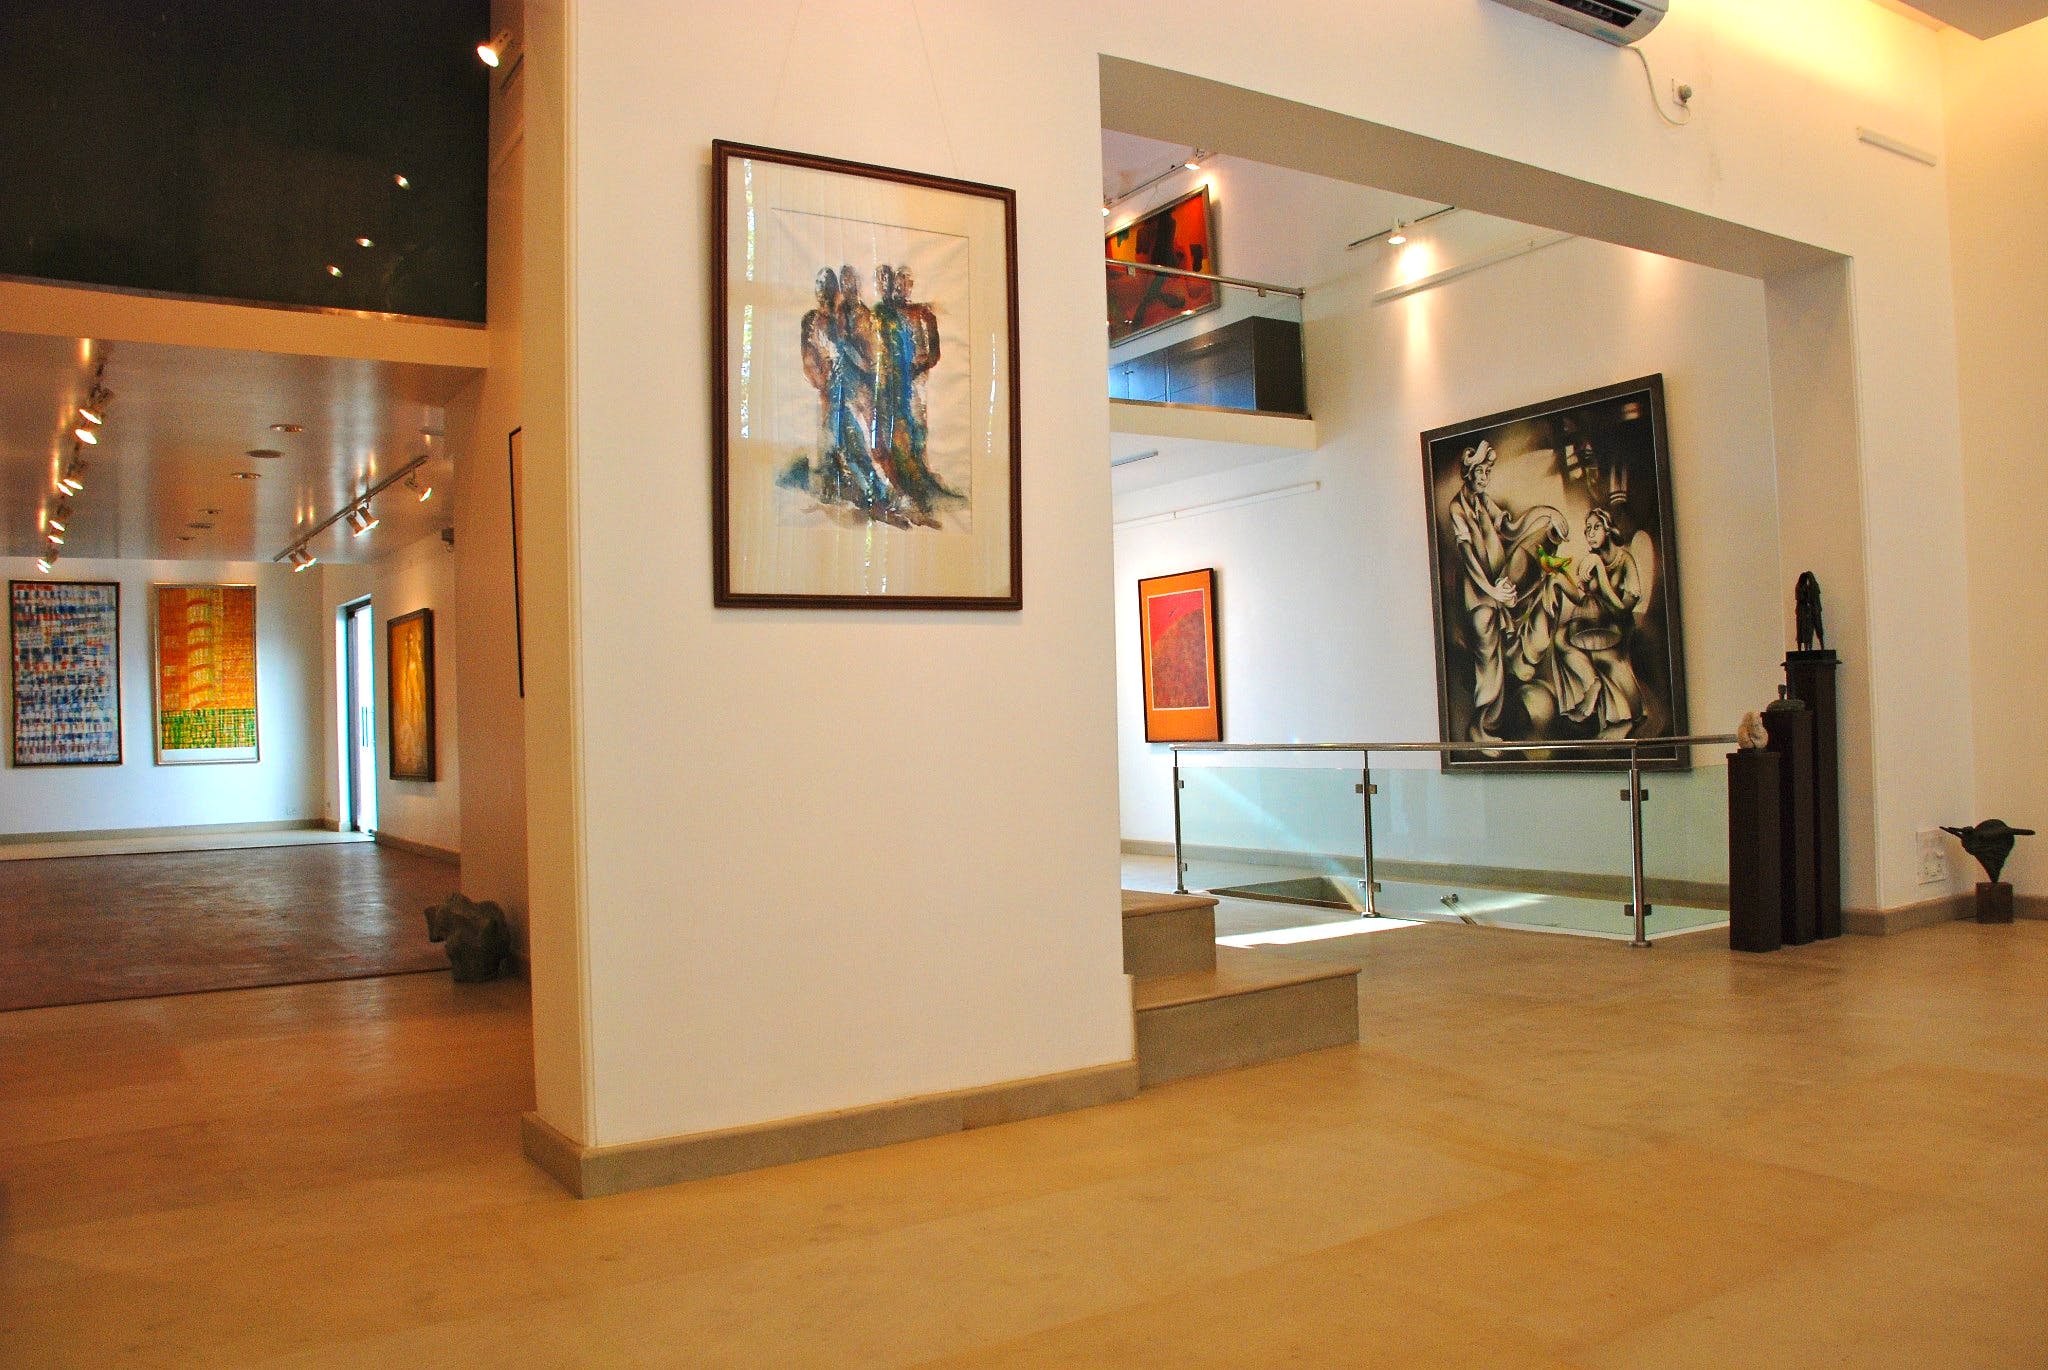 Art gallery,Museum,Building,Exhibition,Tourist attraction,Interior design,Art exhibition,Room,Collection,Art